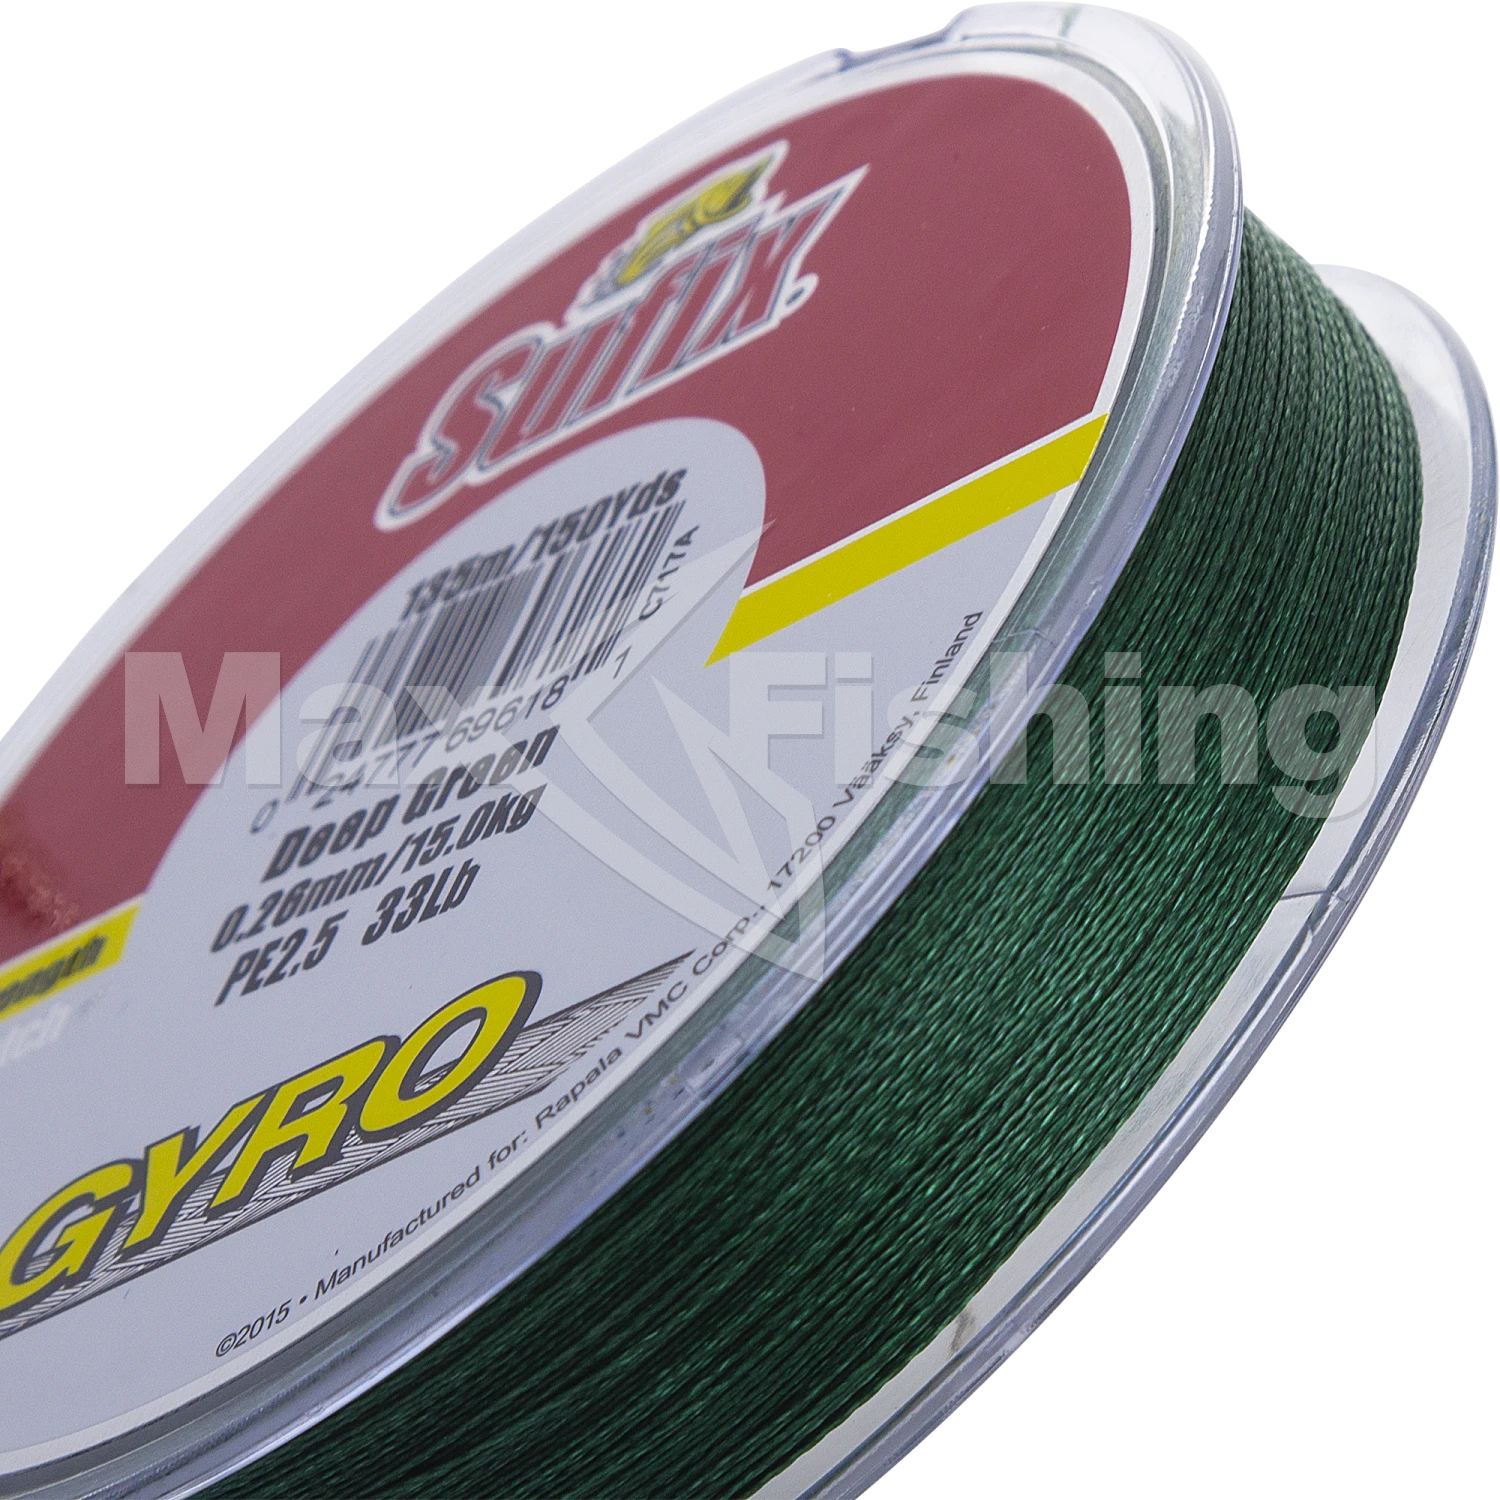 Шнур плетеный Sufix Gyro Braid 0,26мм 135м (green)